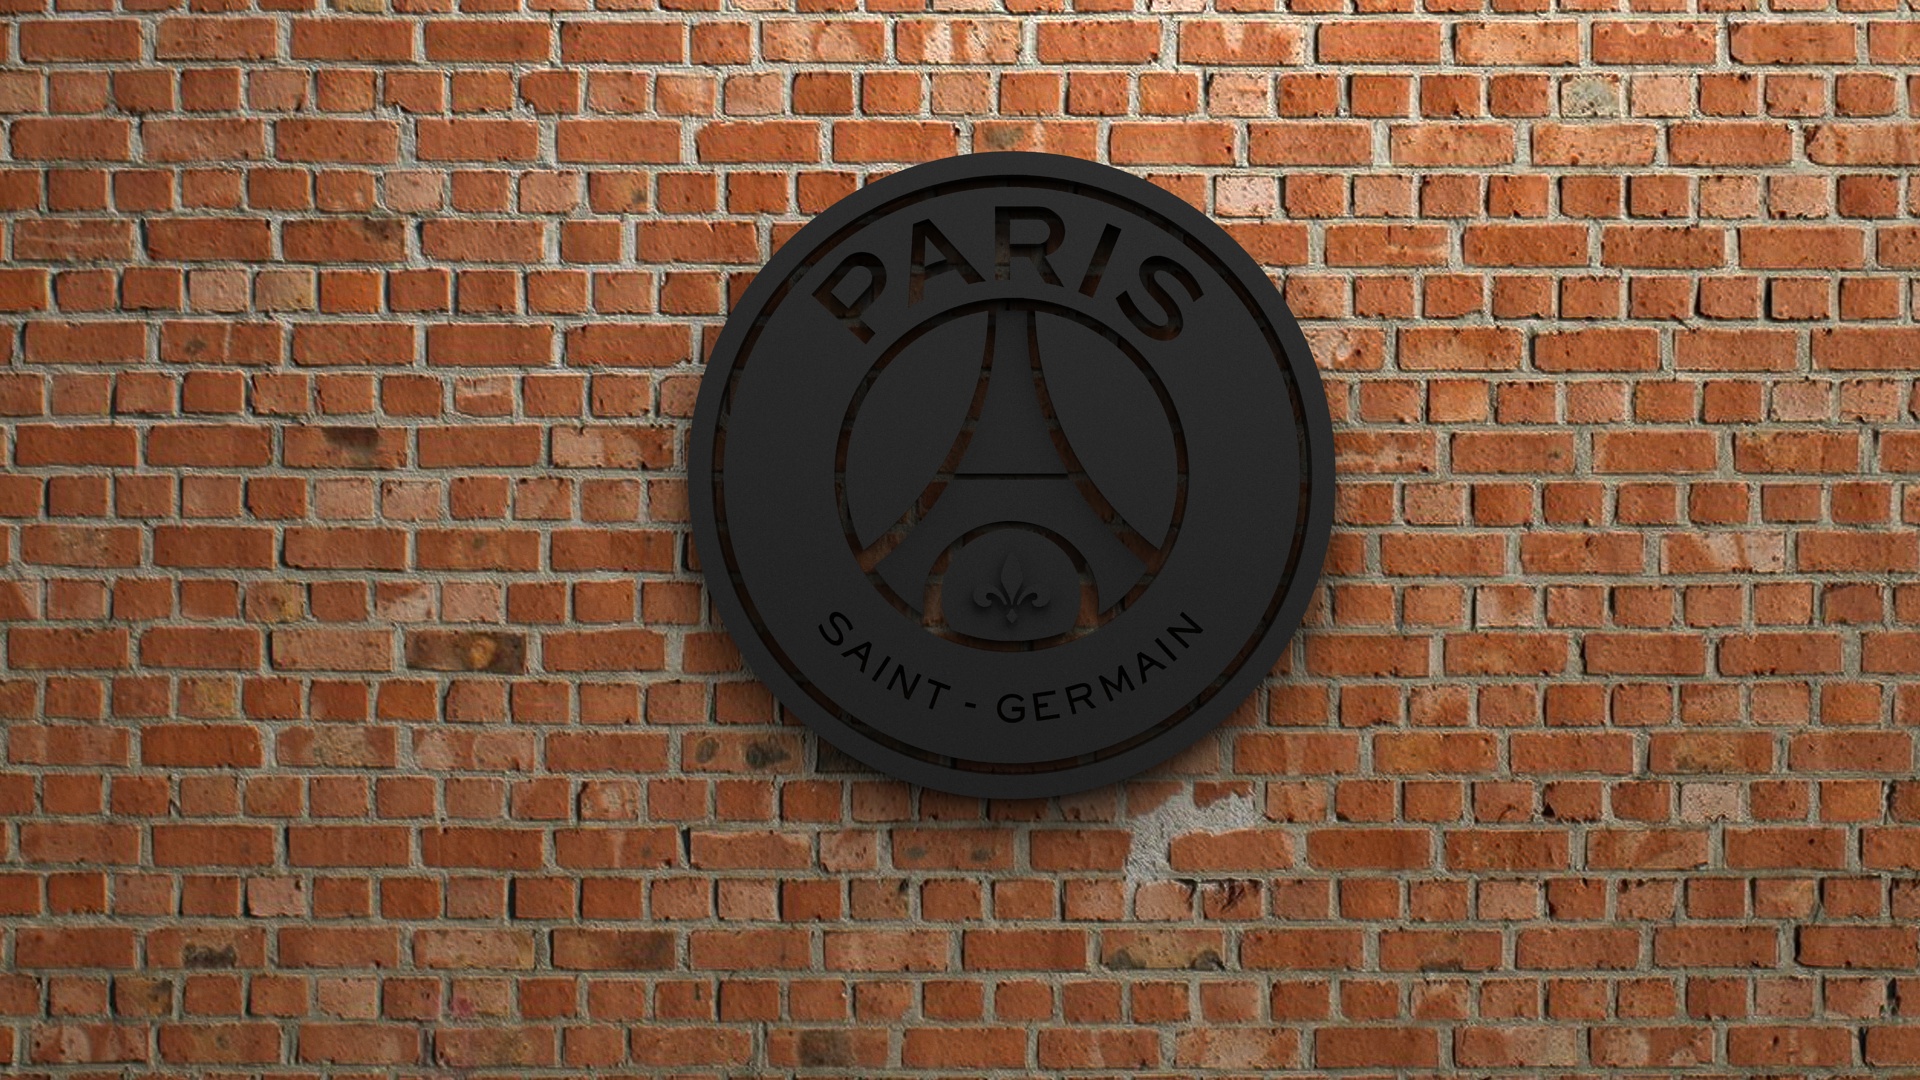 Descarga gratuita de fondo de pantalla para móvil de Fútbol, Logo, Emblema, Deporte, París Saint Germain Fc.